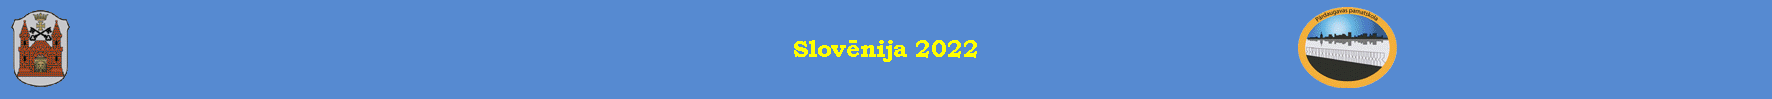 Slovēnija 2022